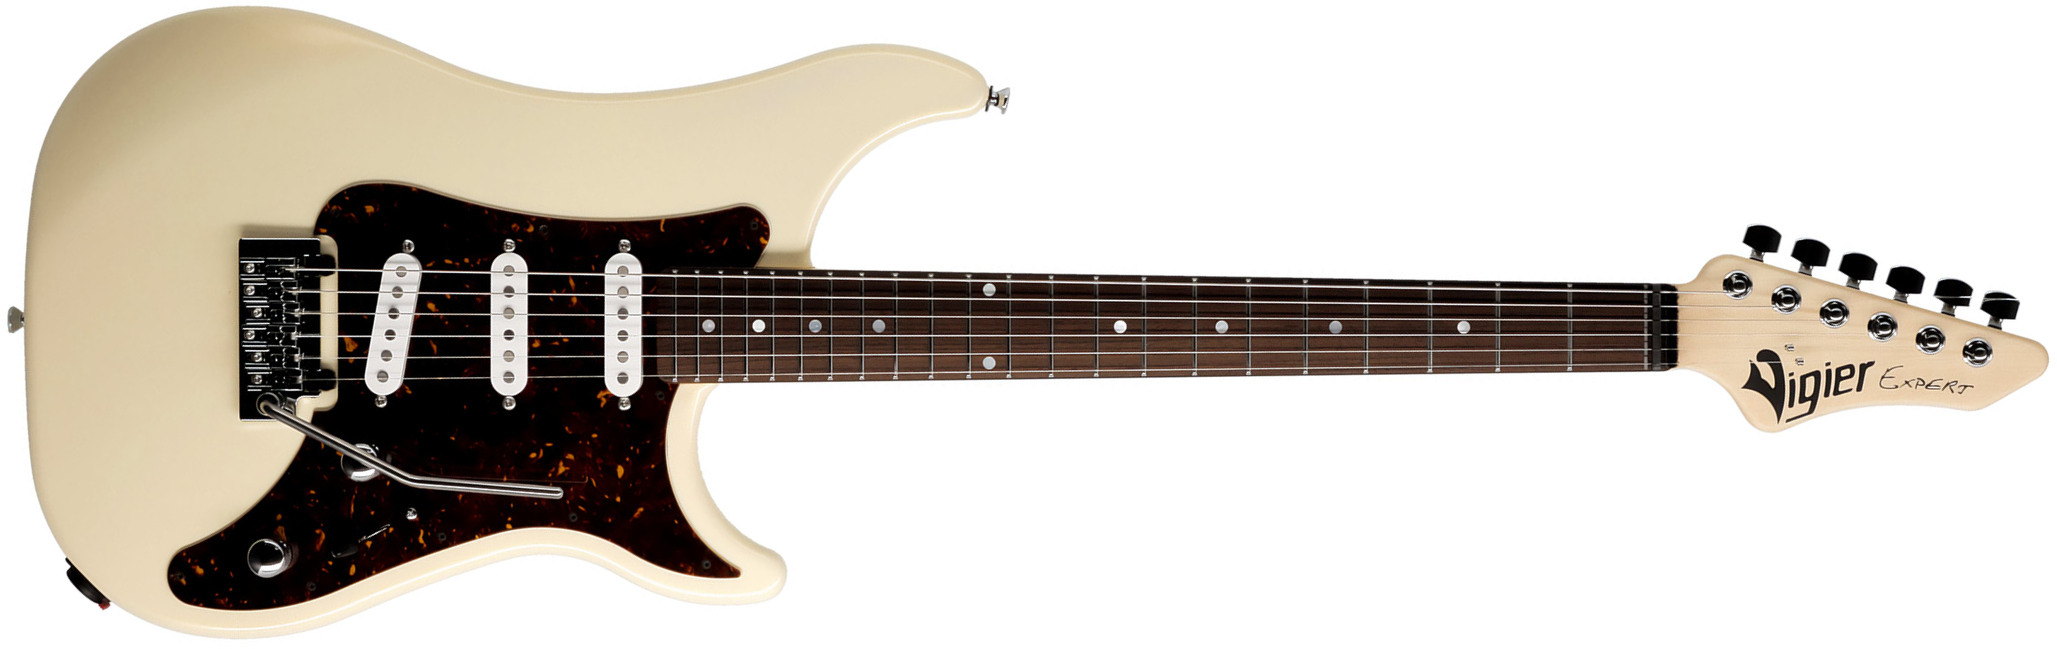 Vigier Expert Classic Rock 3s Trem Rw - Retro White - Elektrische gitaar in Str-vorm - Main picture